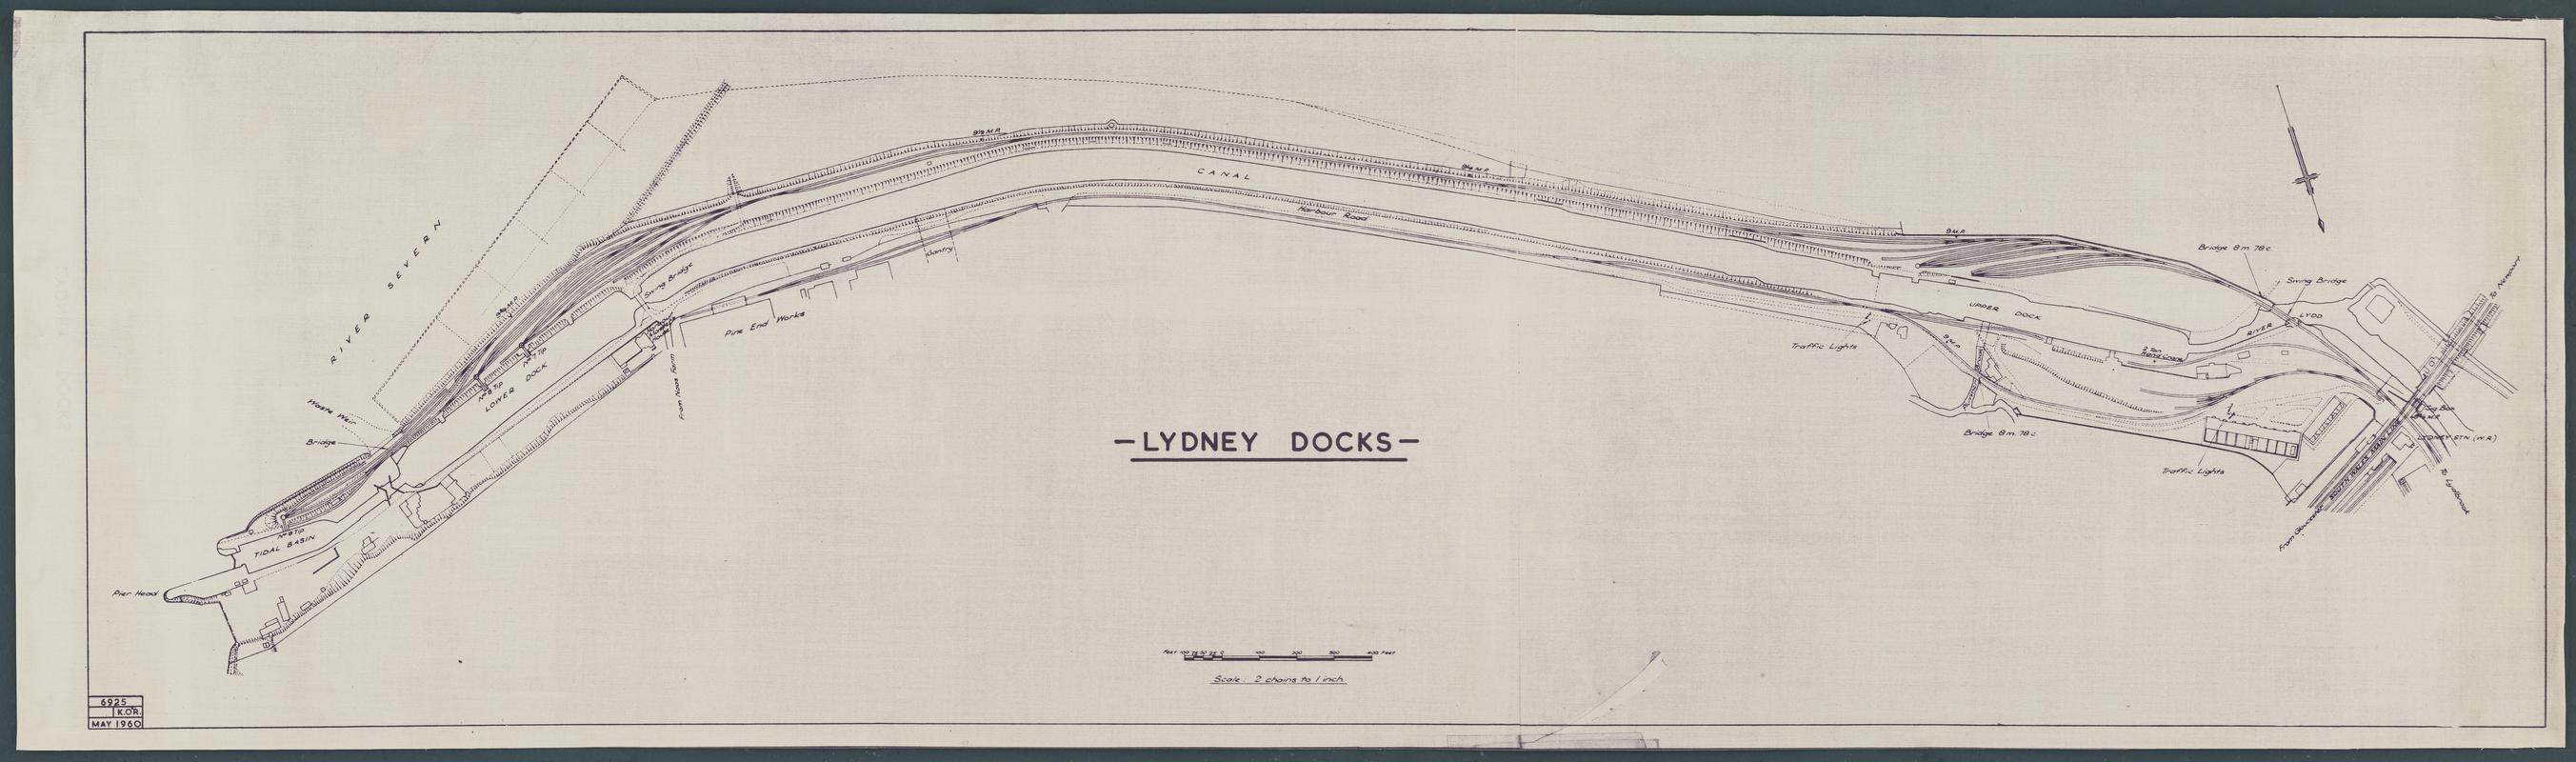 Plan &#039;Lydney Docks&#039;, 1960